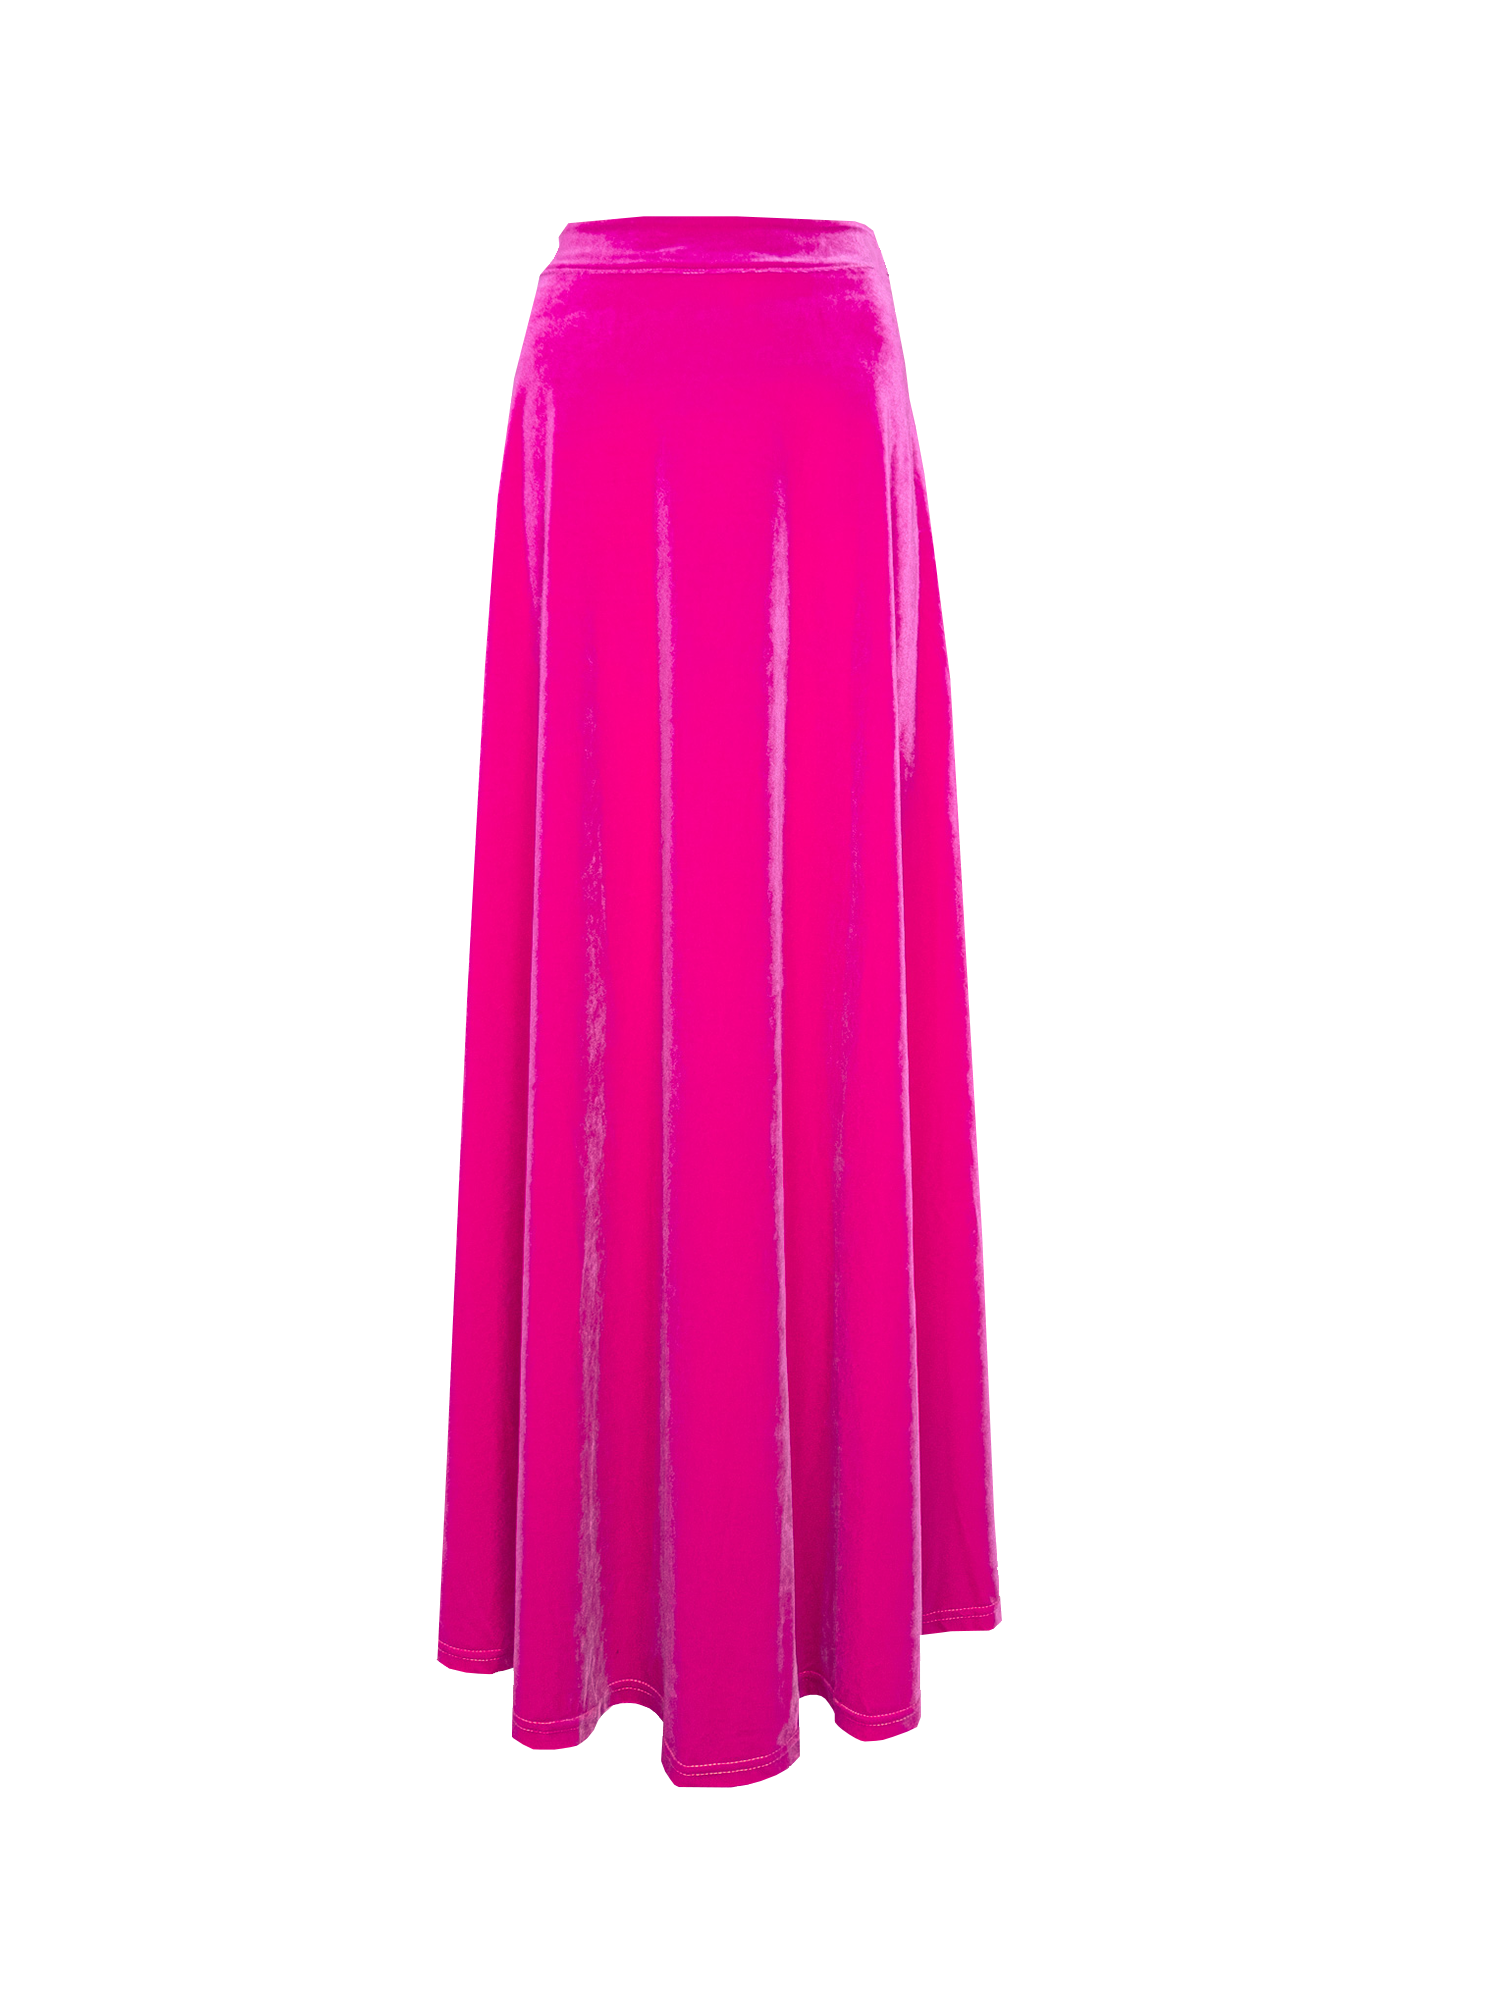 TOSCA - long skirt in fuchsia chenille